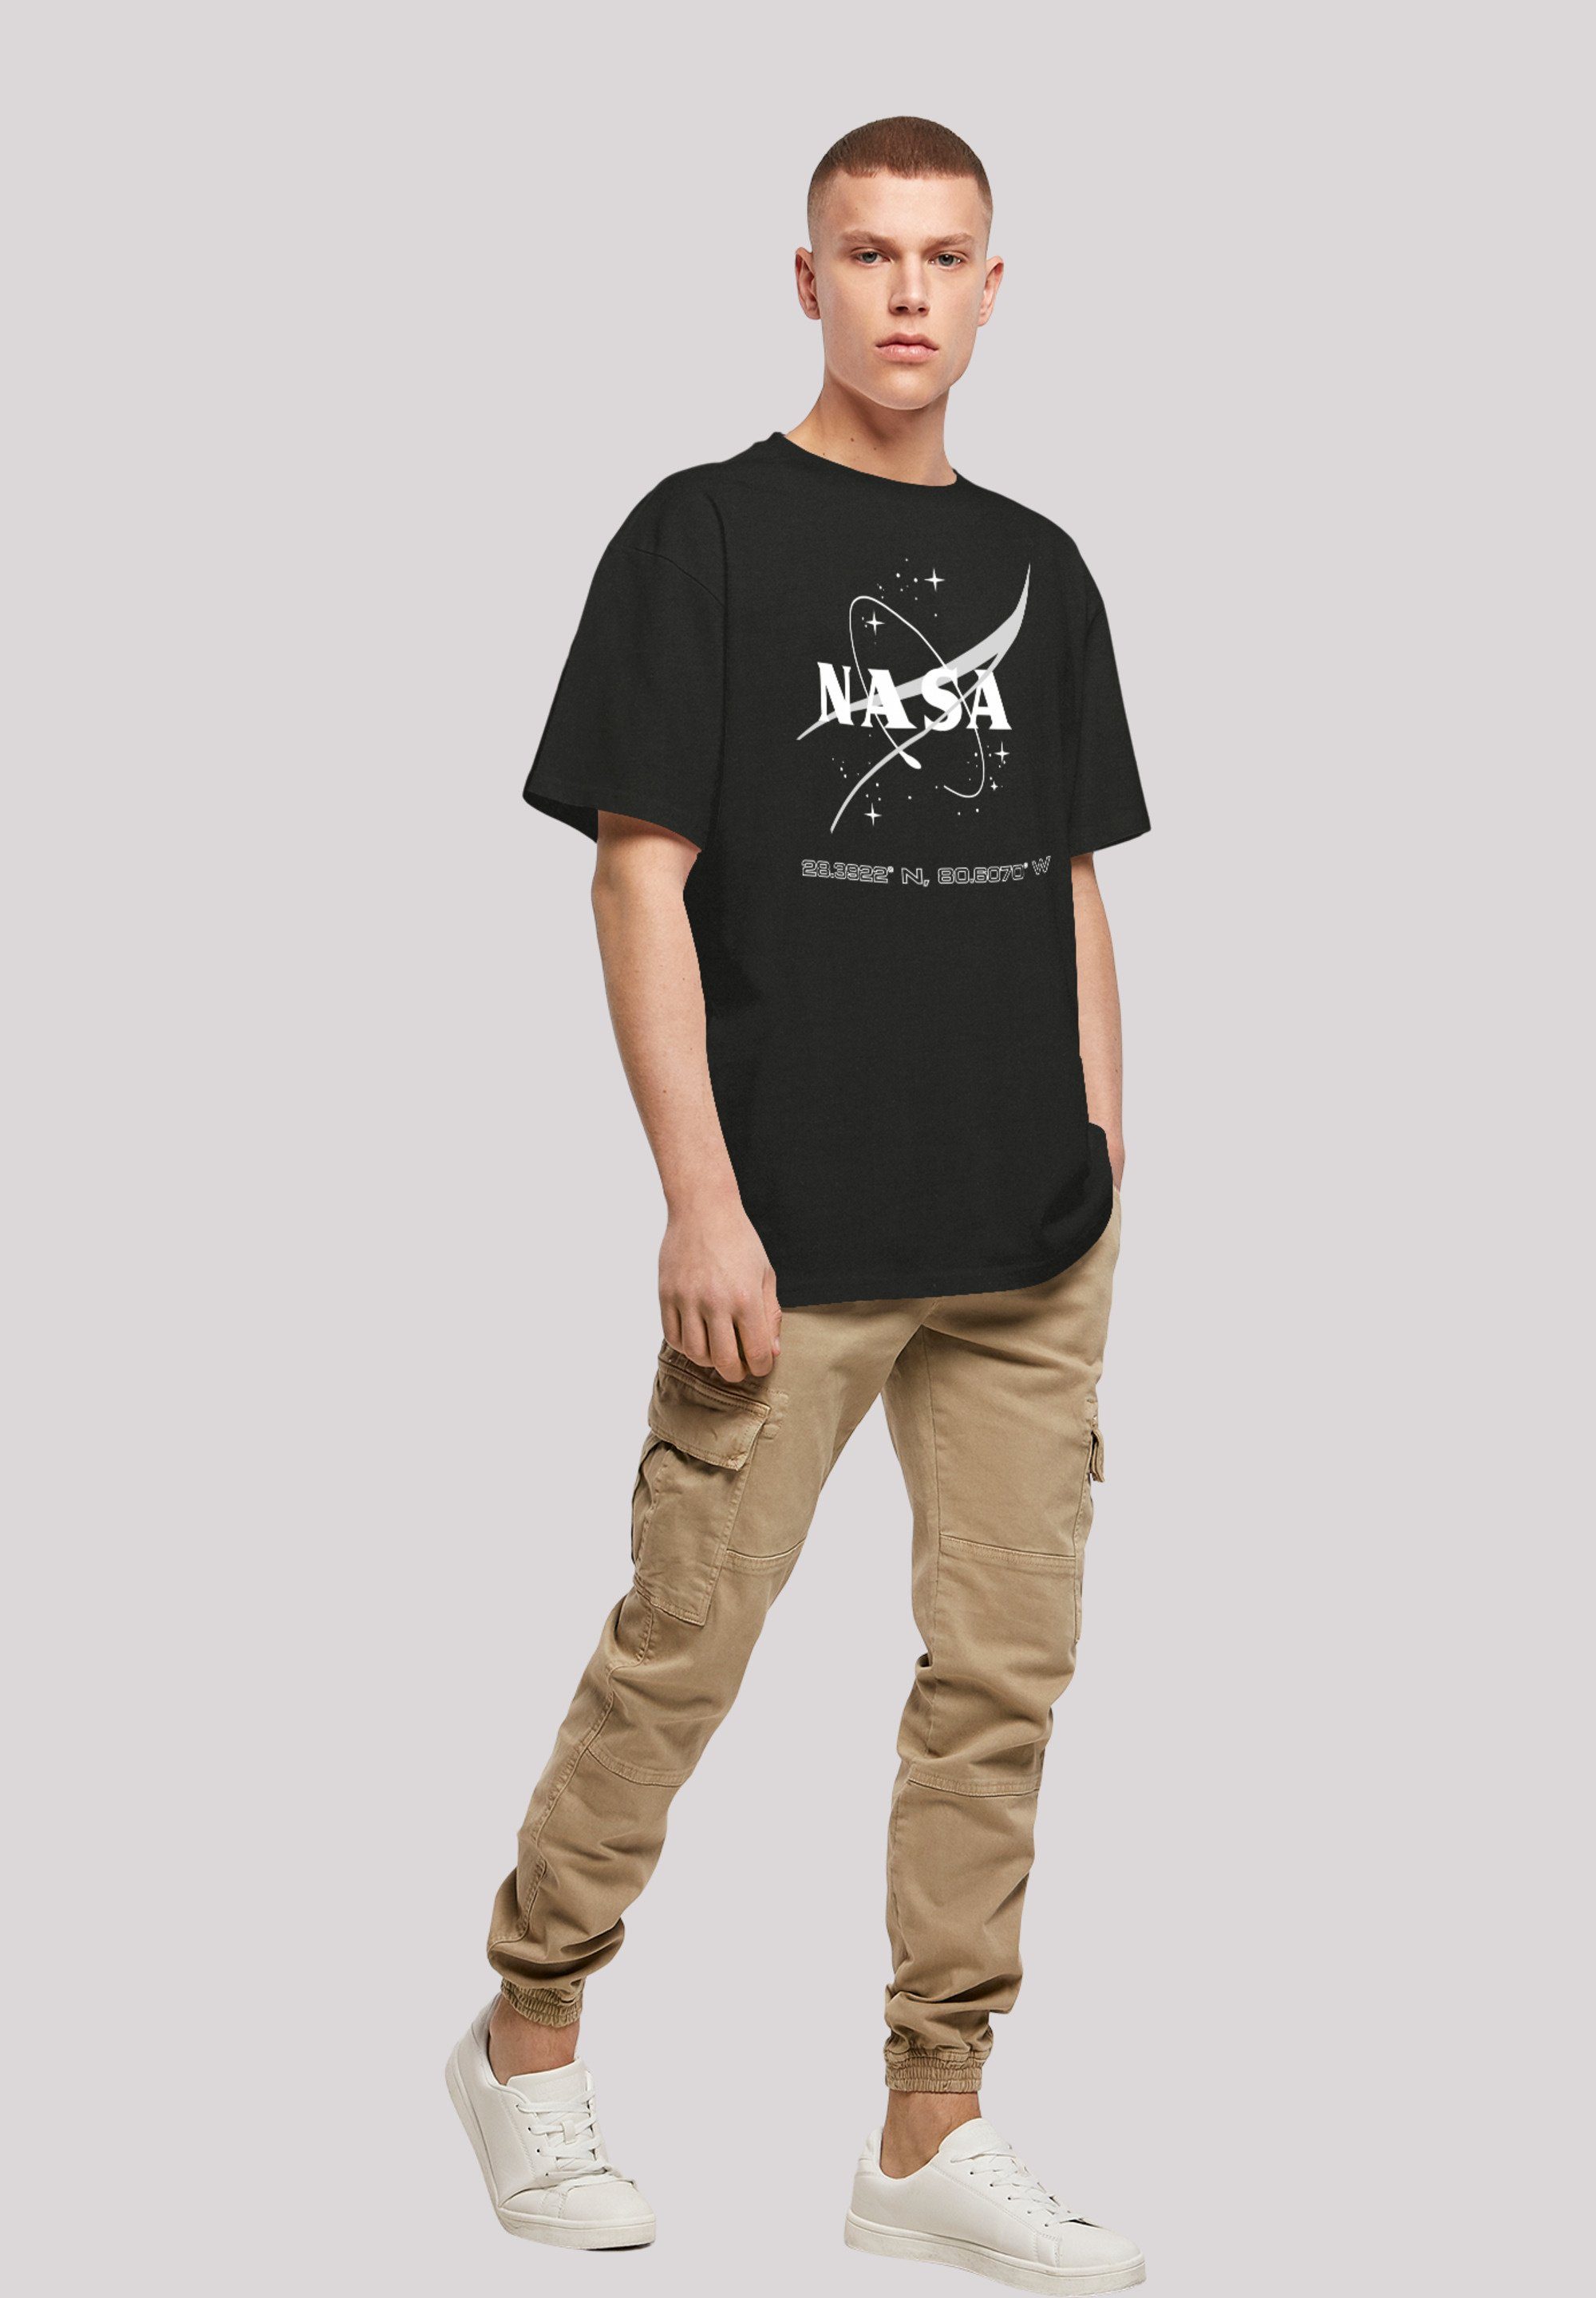 F4NT4STIC T-Shirt NASA schwarz PHIBER Print Meatball FASHION Logo METAVERSE